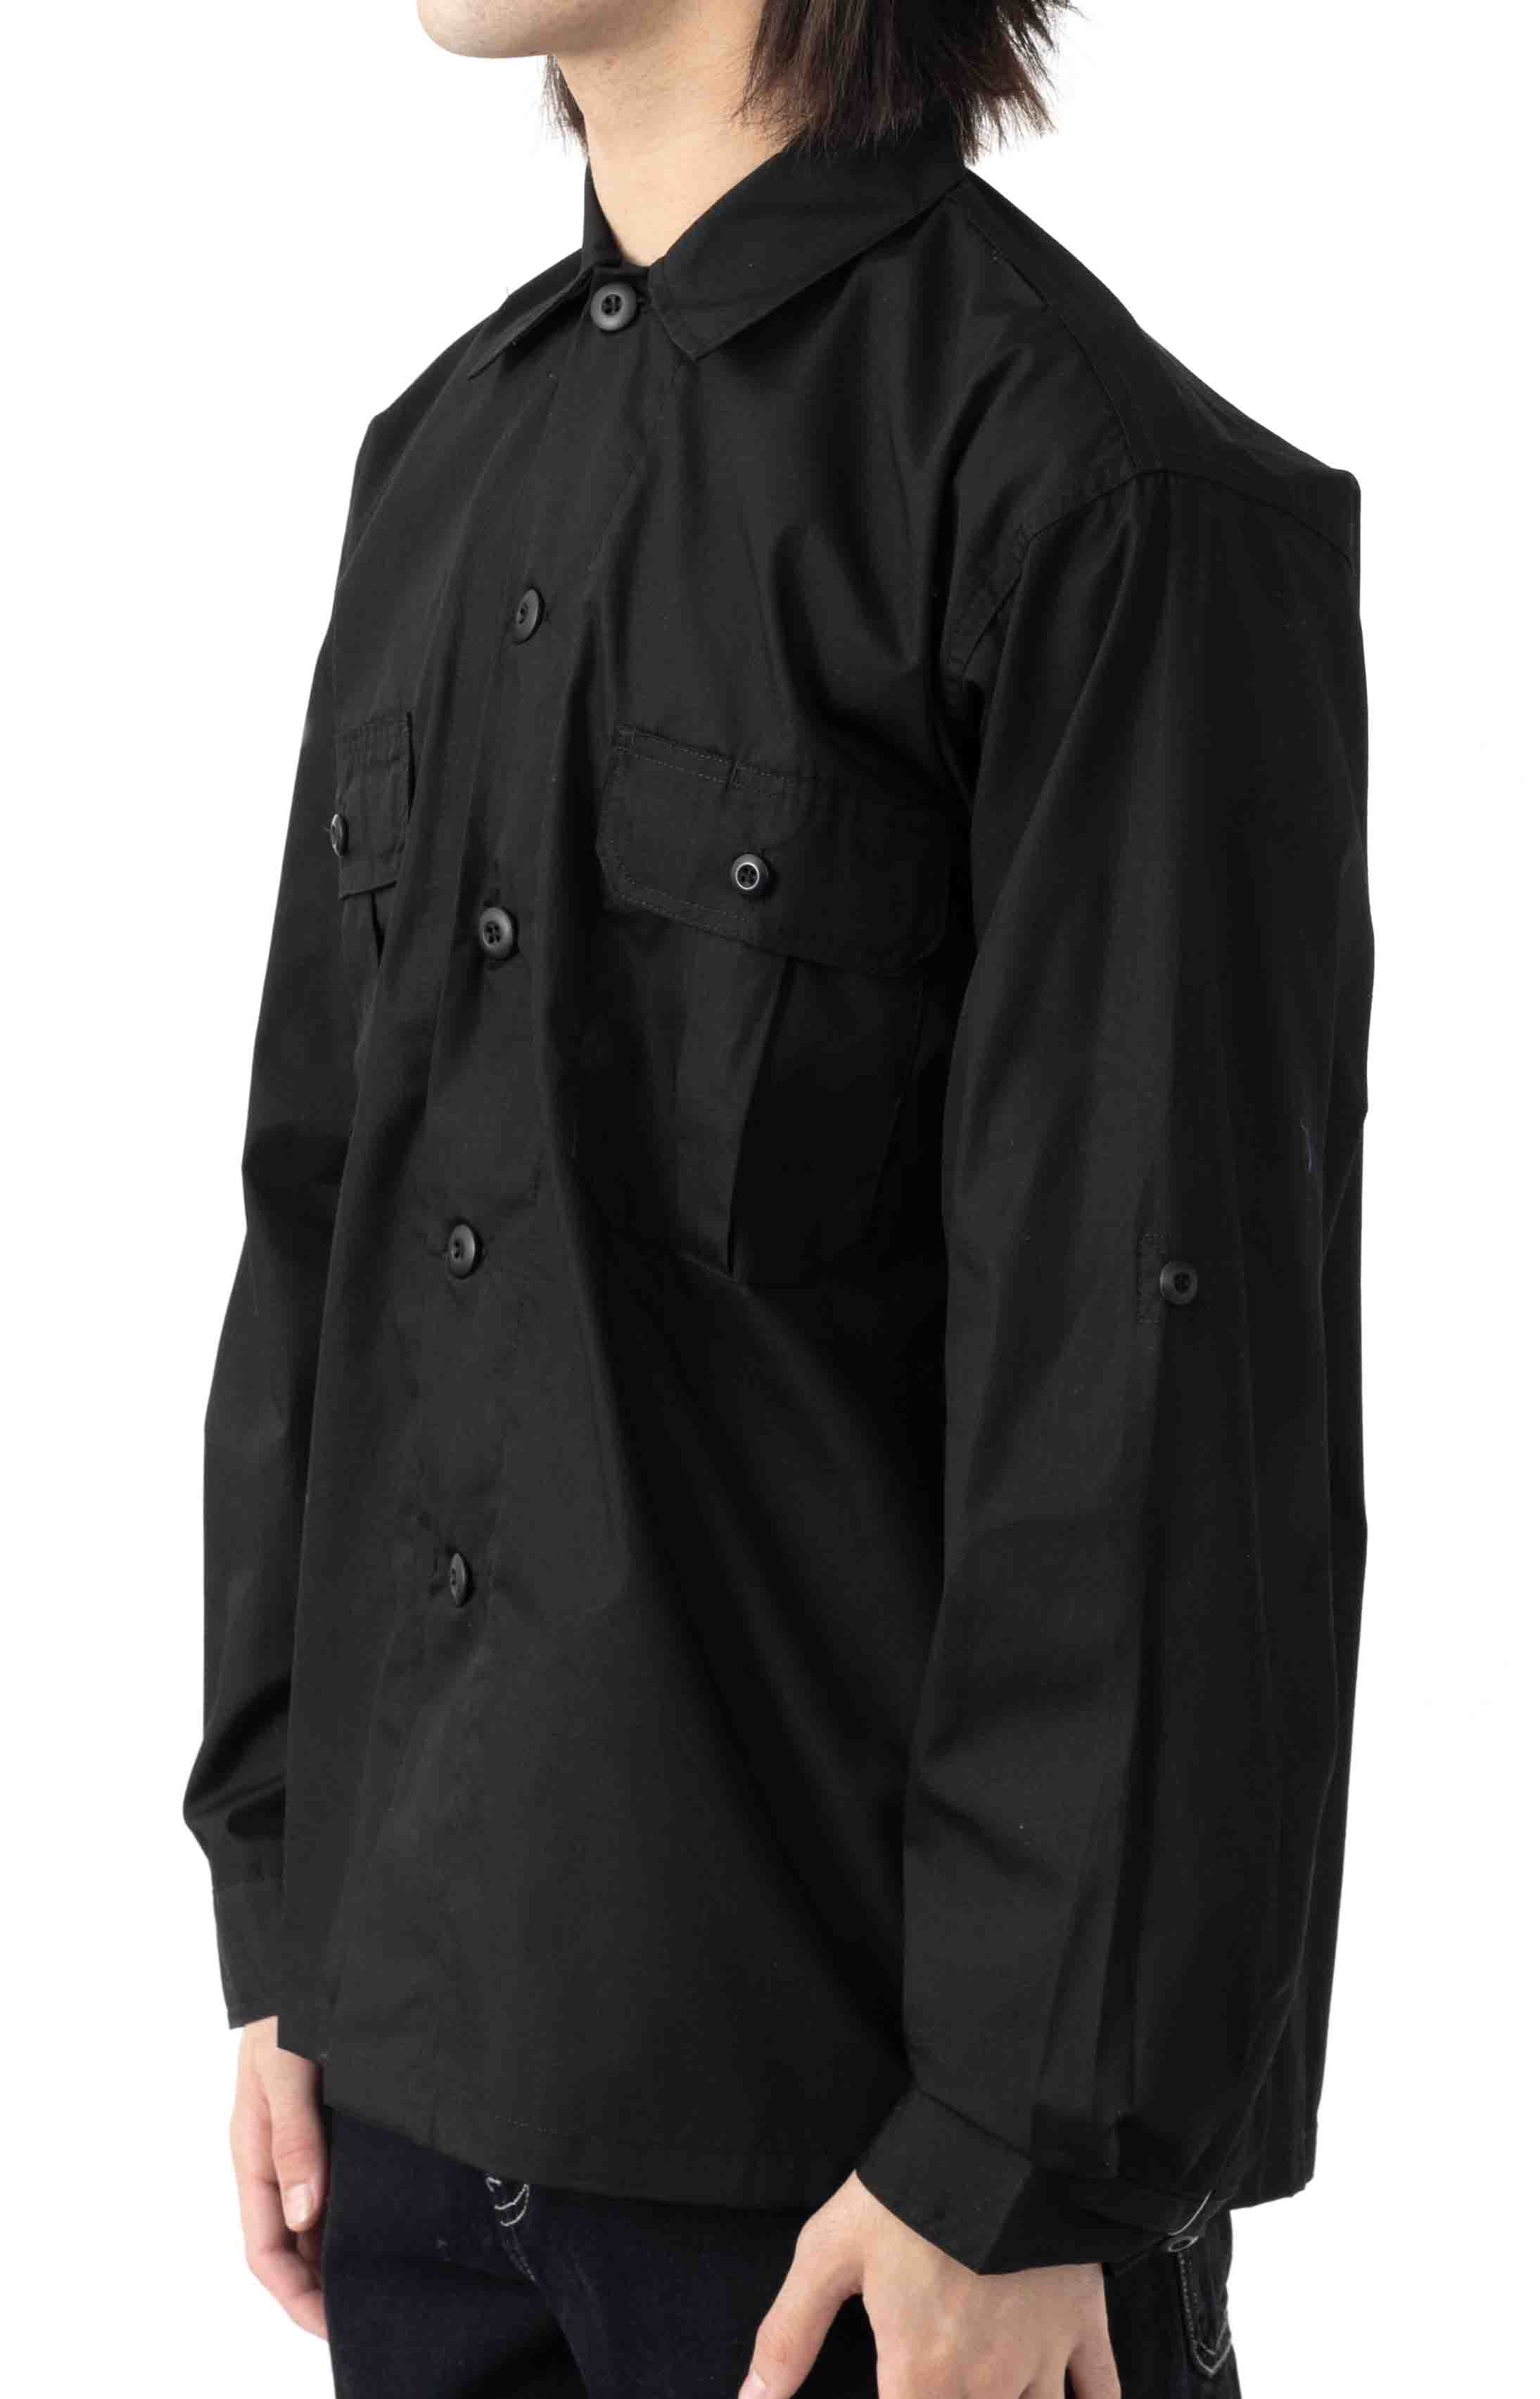 (10725) Rothco Lightweight Tactical Shirt - Black